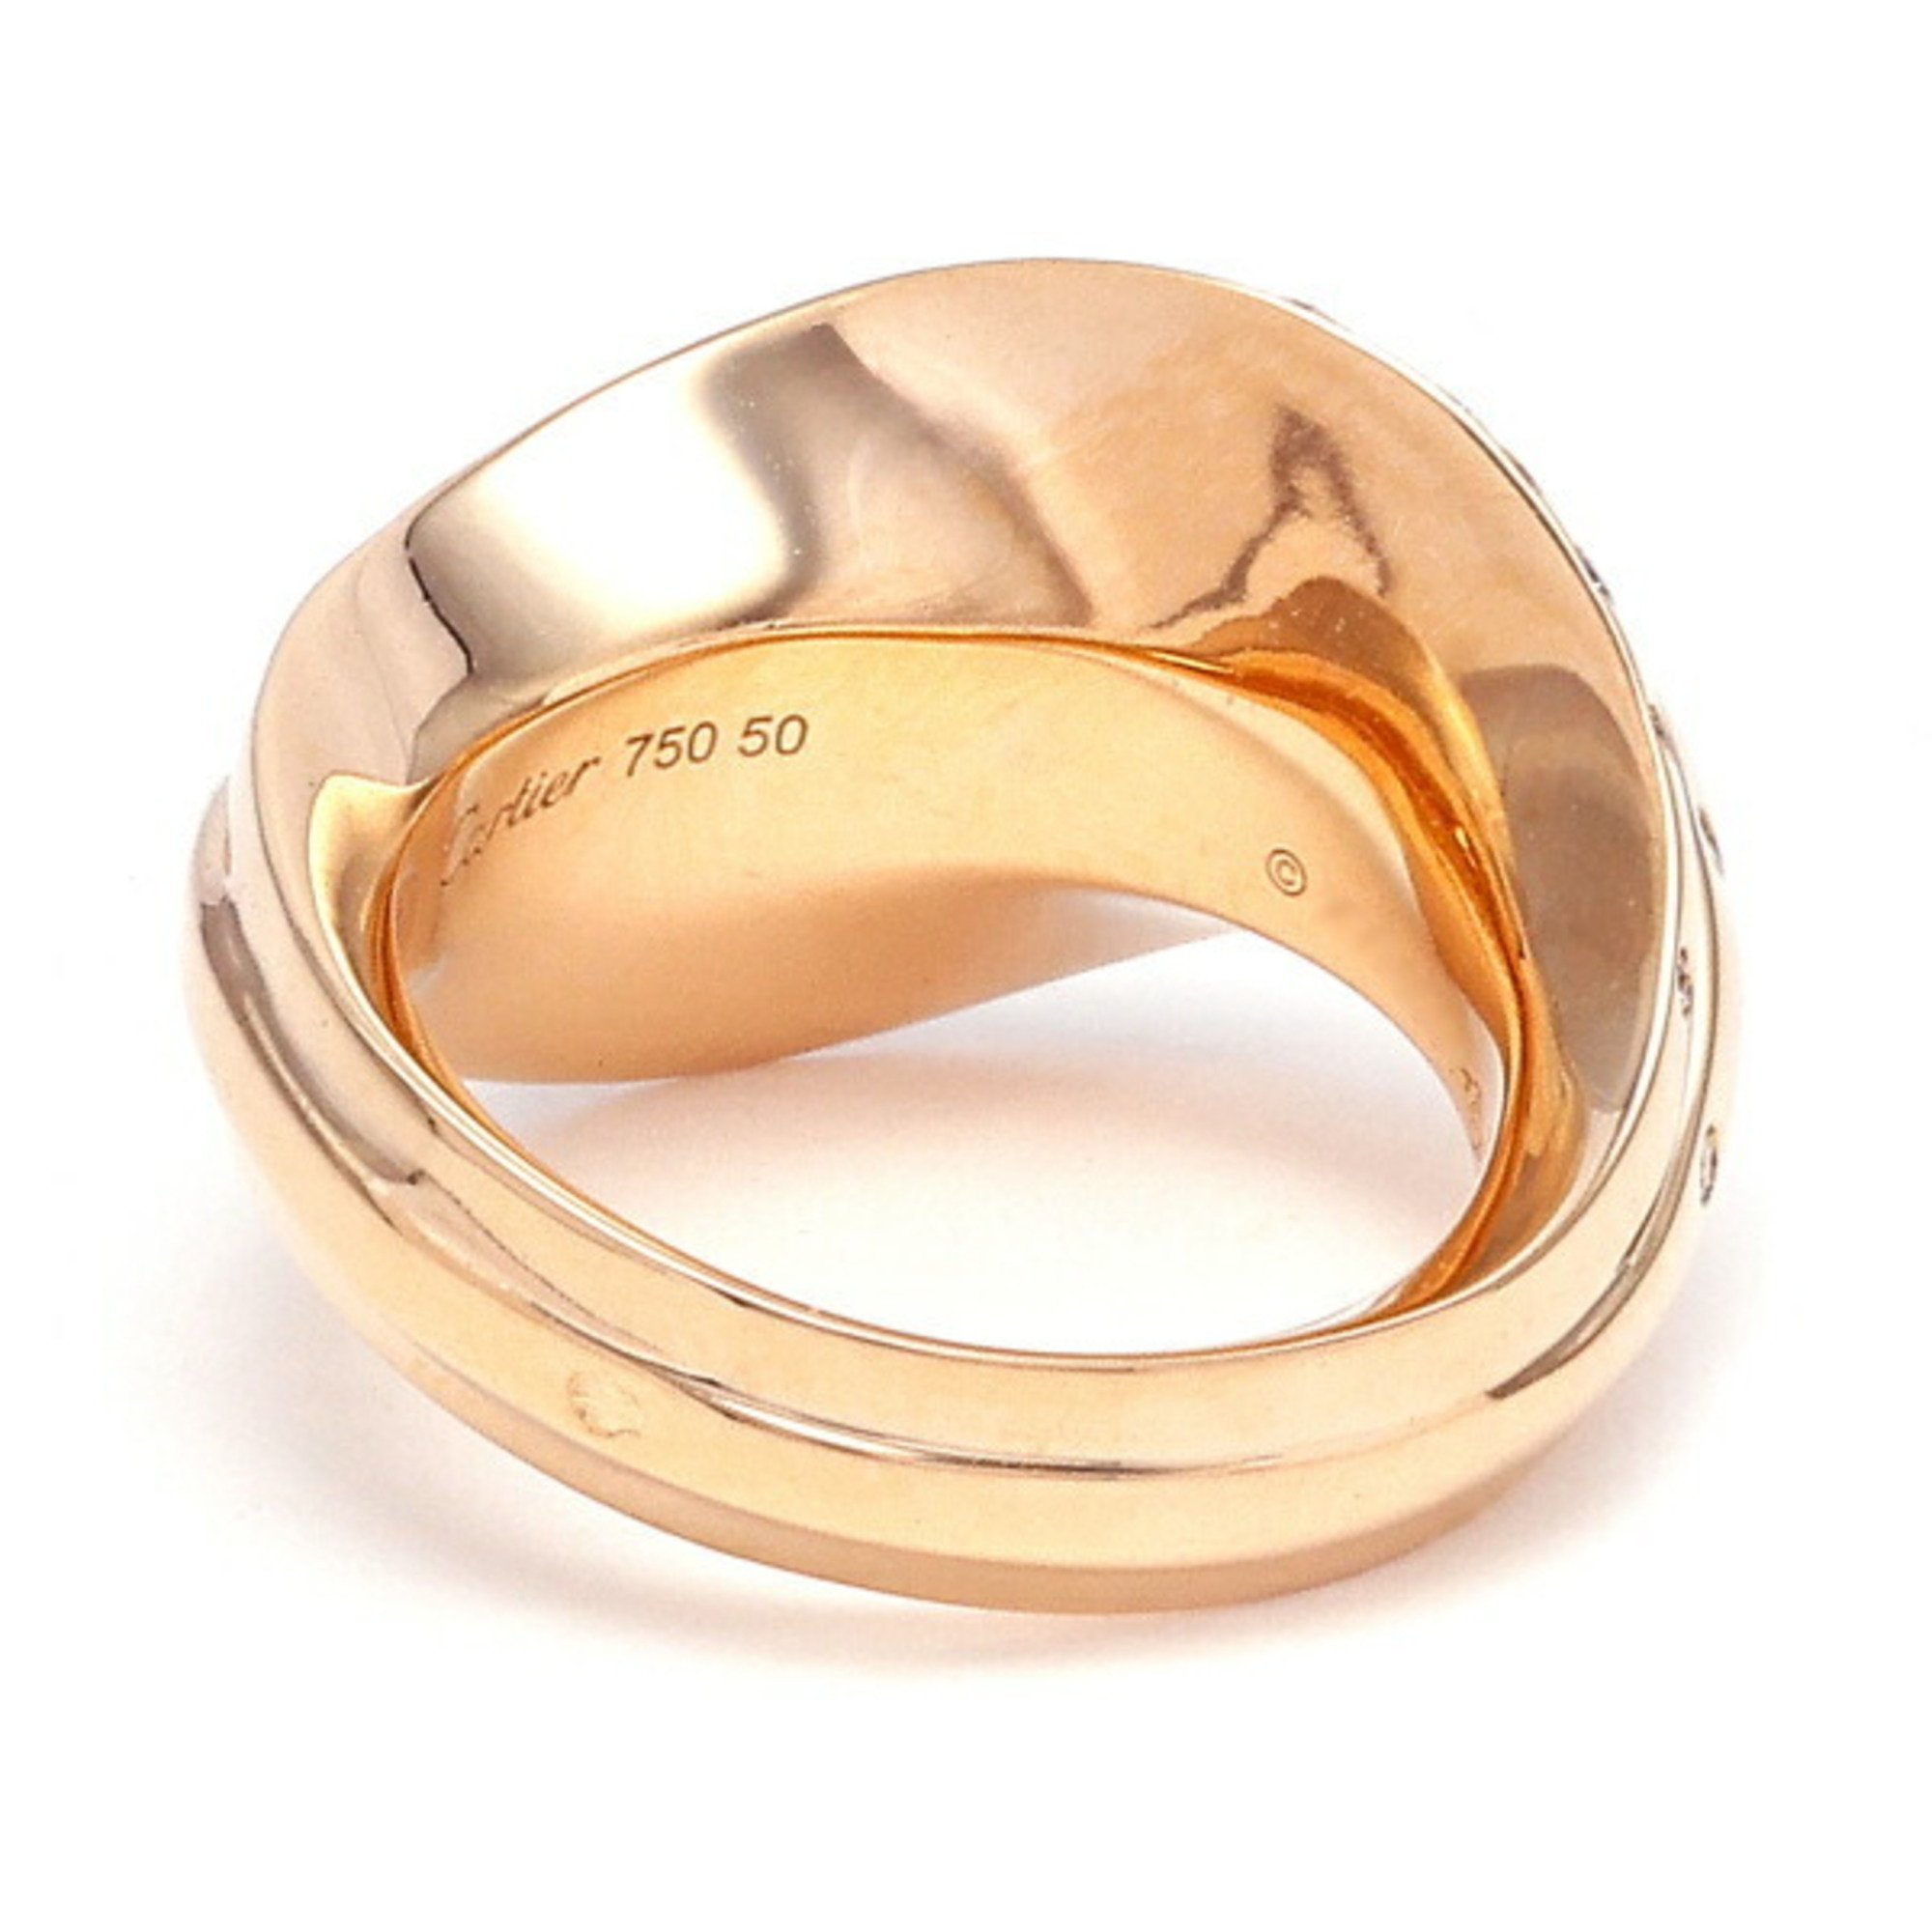 Cartier Nouvelle Vague K18PG Pink Gold Ring